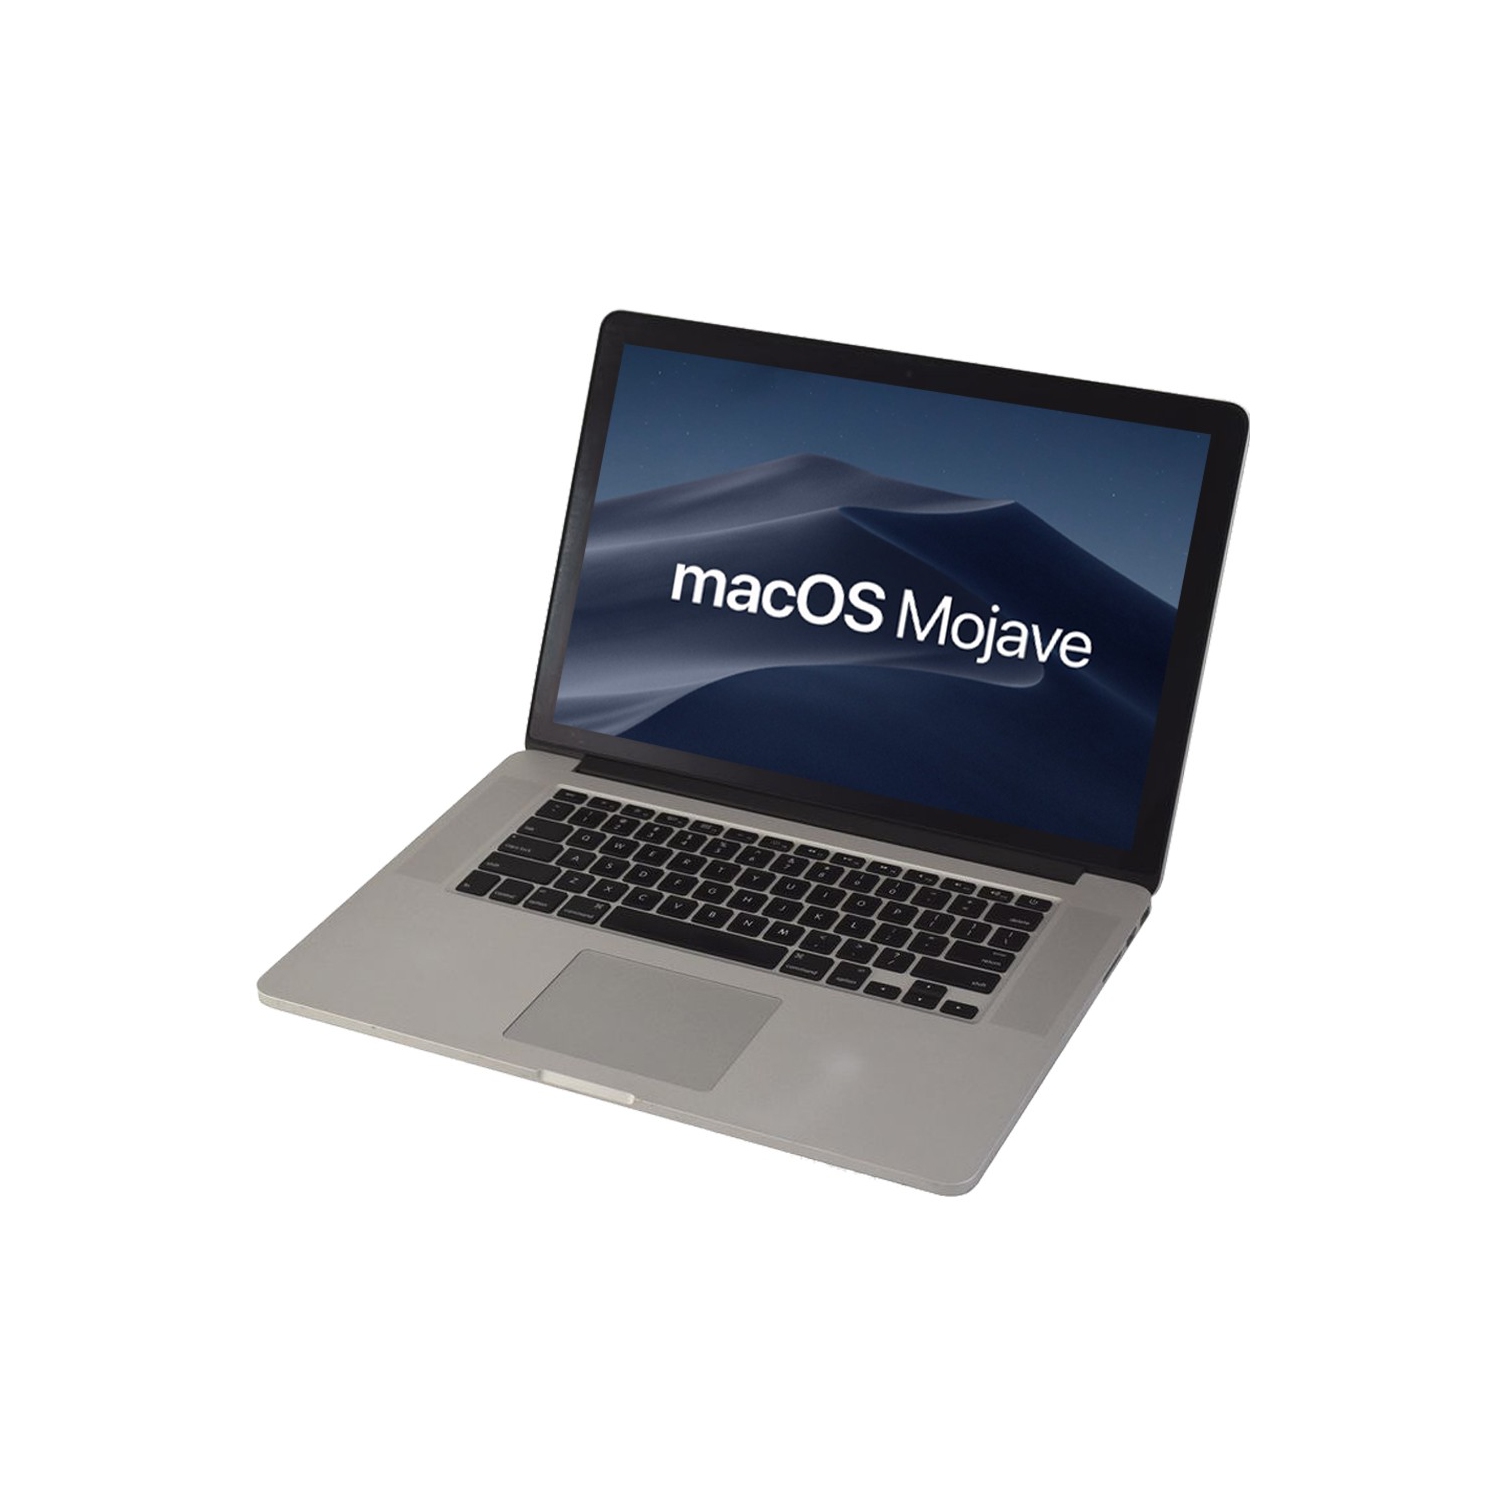 Refurbished (Excellent) - MacBook Pro Retina 15 A1398 i7 16GB / 1TB SSD (2015 Model) -Grade A 9/10! macOS Mojave New Apple Power Adapter